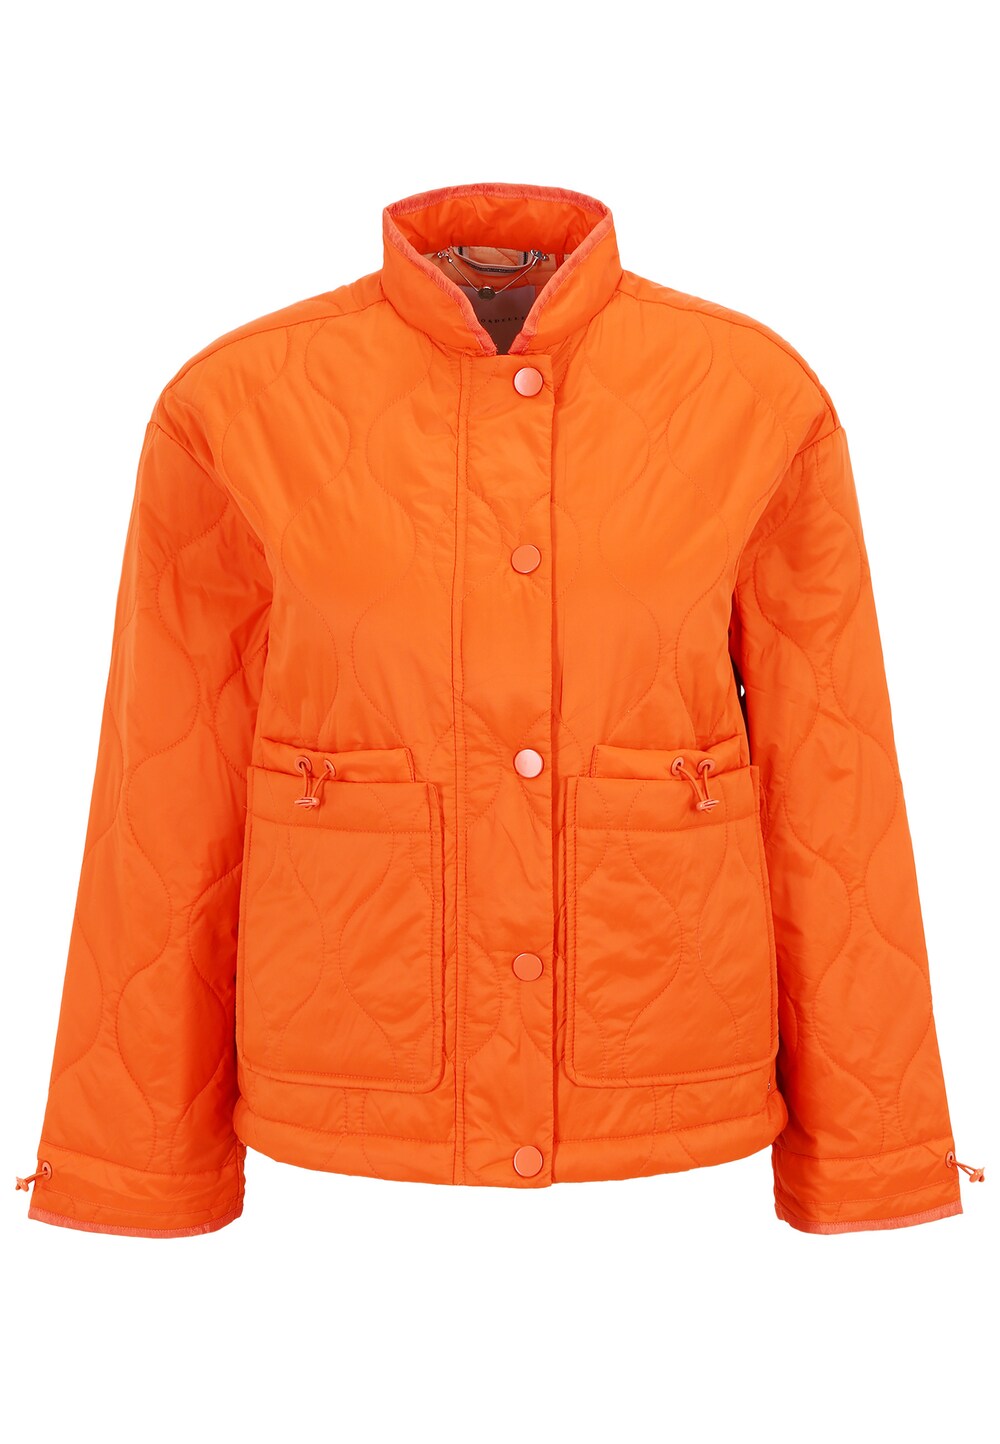 зимняя куртка rino Межсезонная куртка Rino & Pelle Buena, апельсин